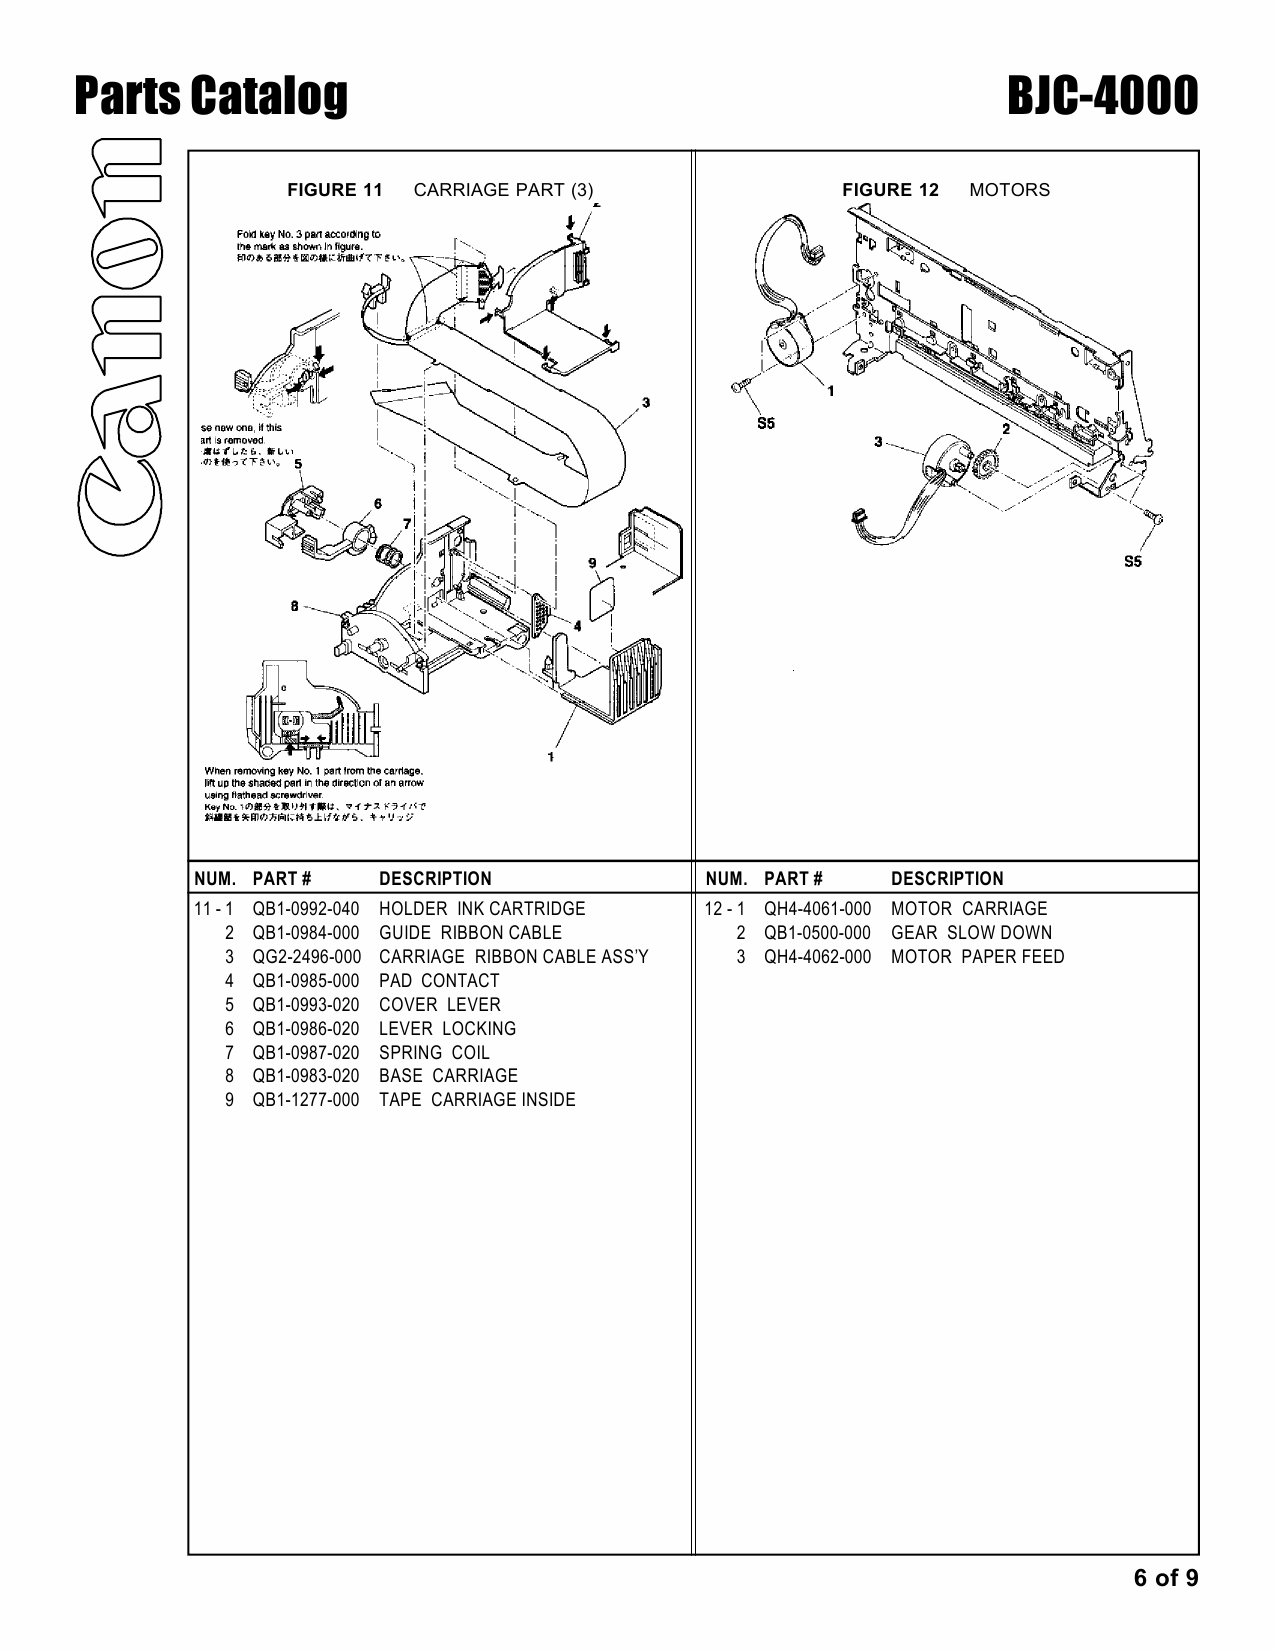 Canon BubbleJet BJC-4000 Parts Catalog Manual-6